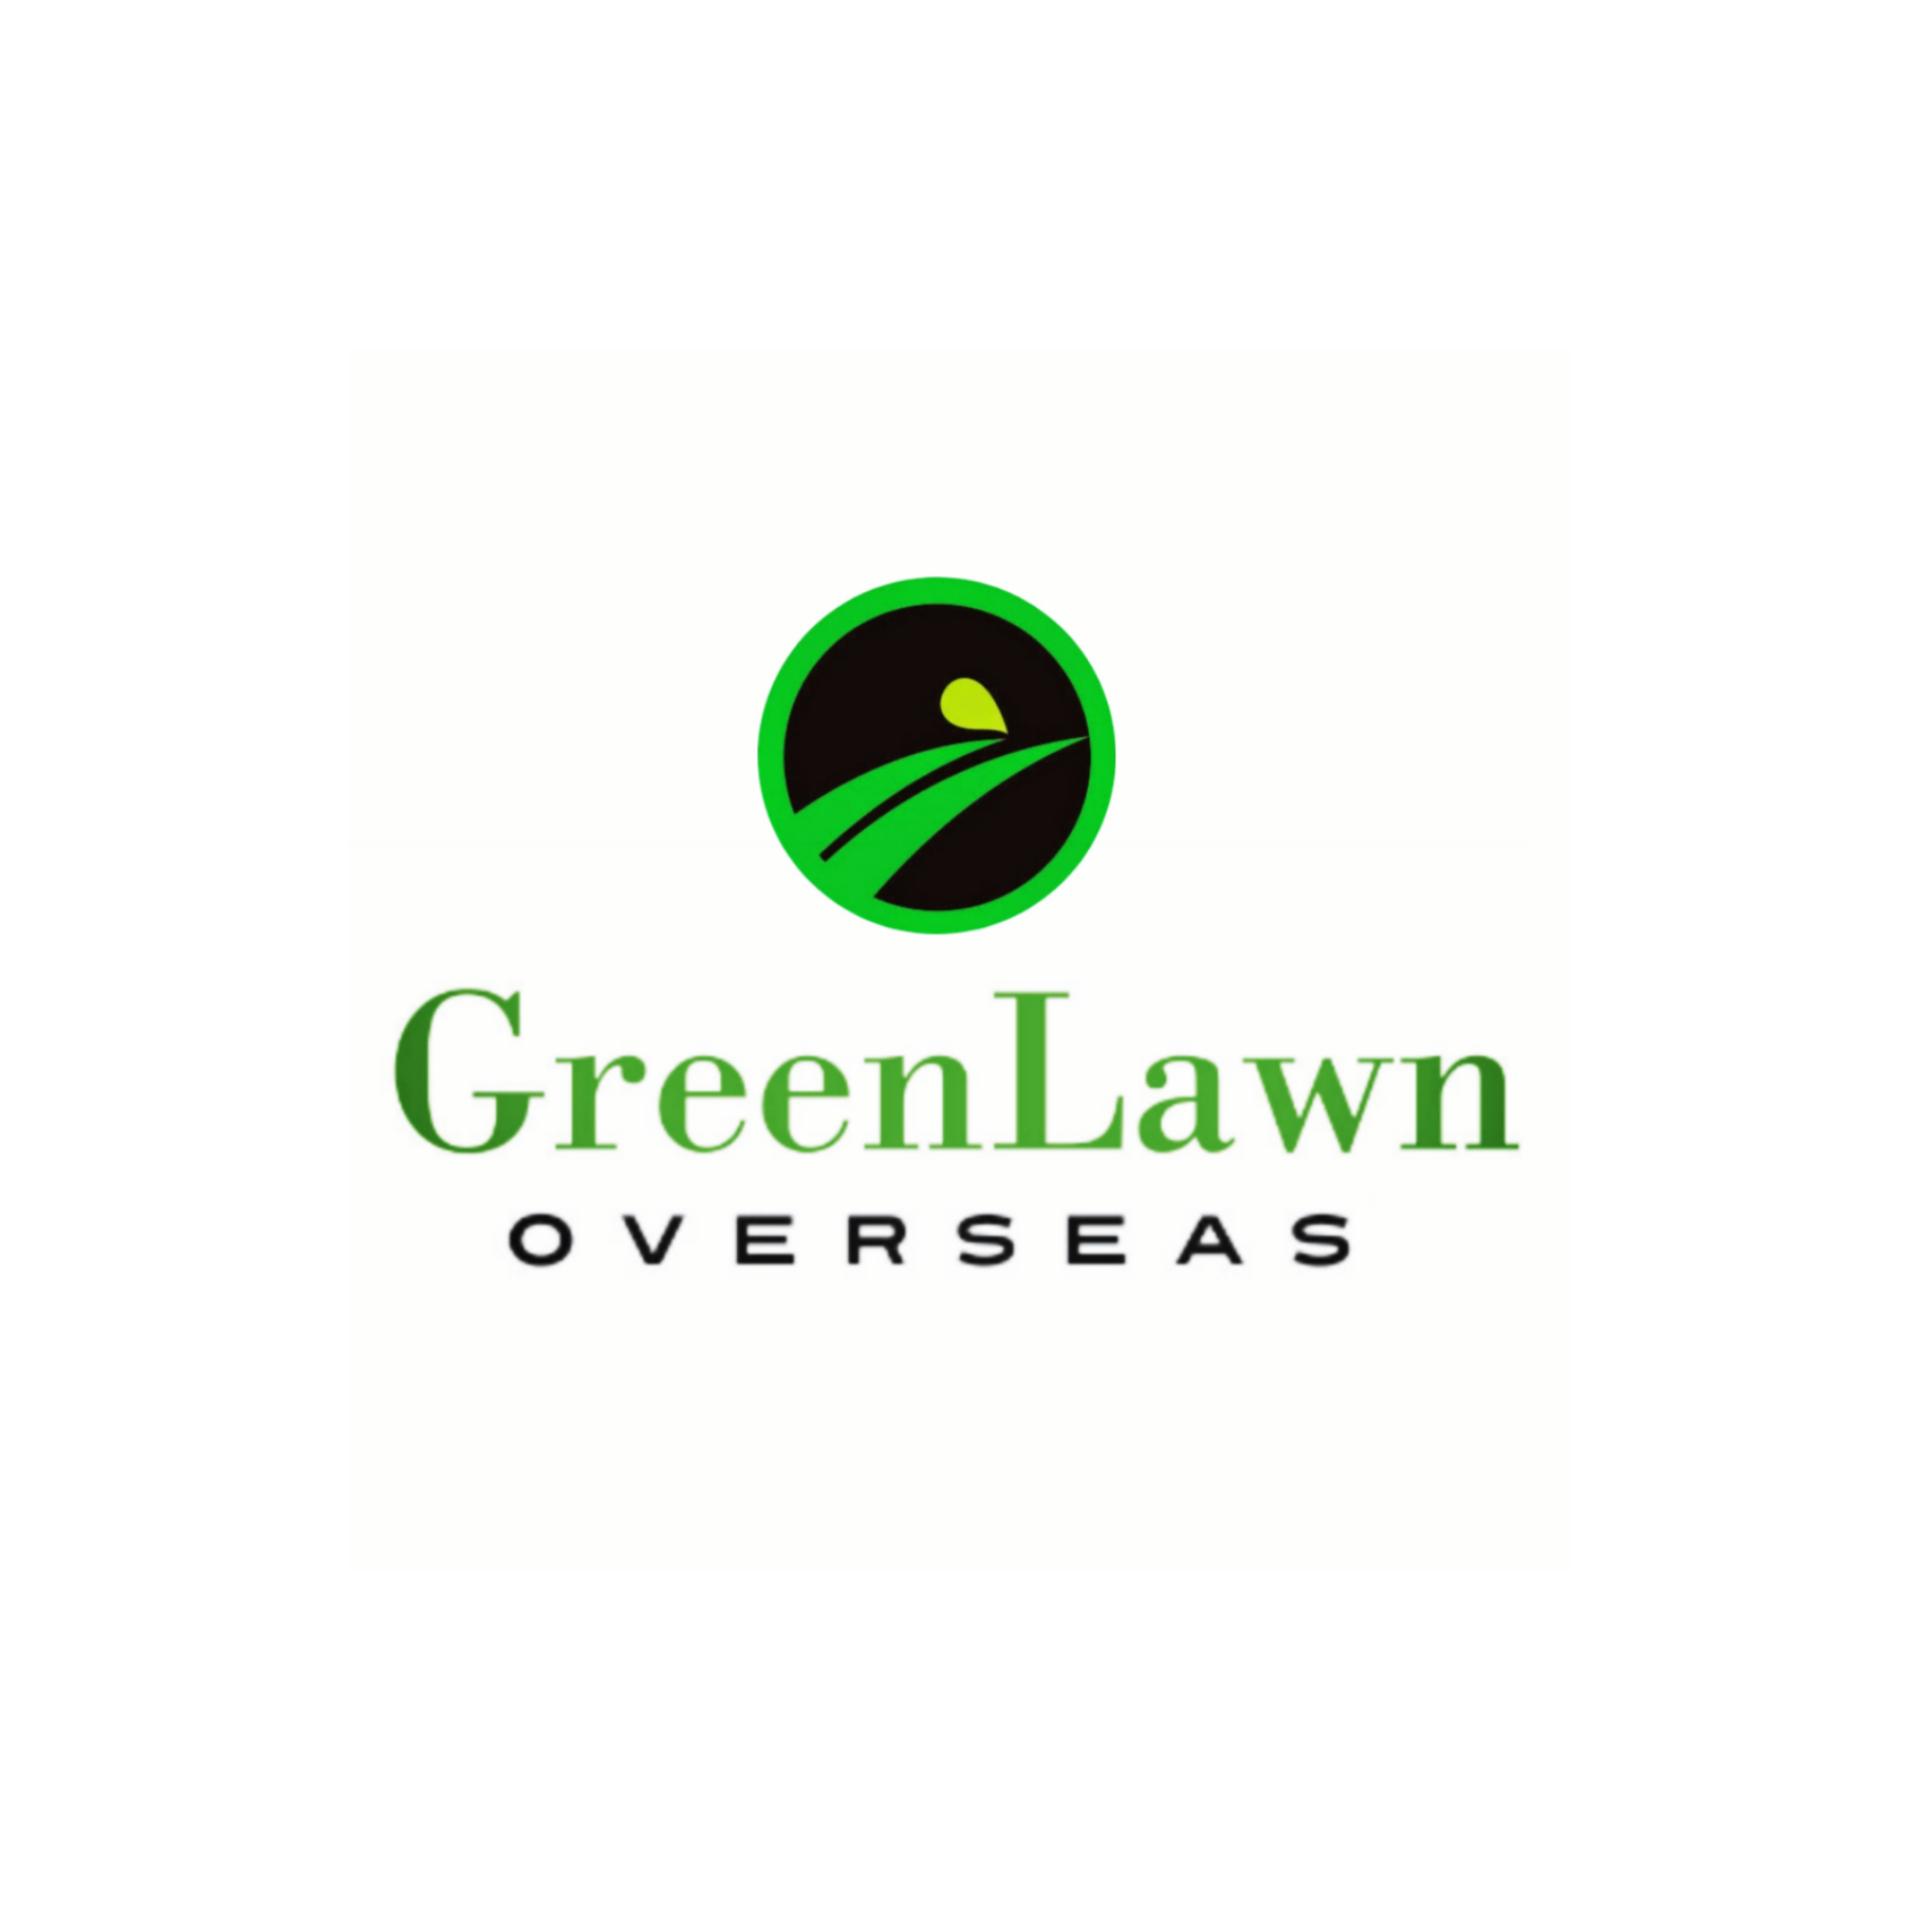 Greenlawn Overseas Ltd.